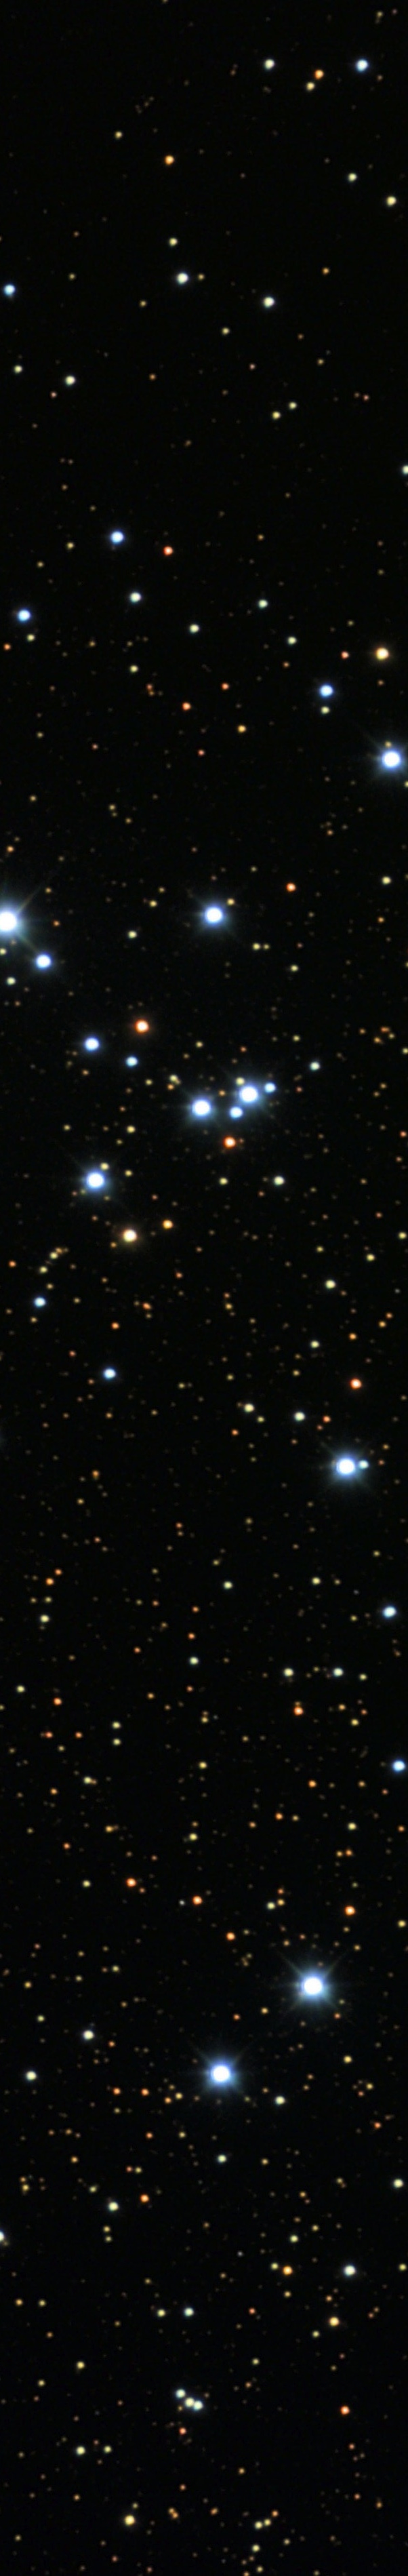 Image credit: Jim Misti, Misti Mountain Observatory, via http://www.mistisoftware.com/.